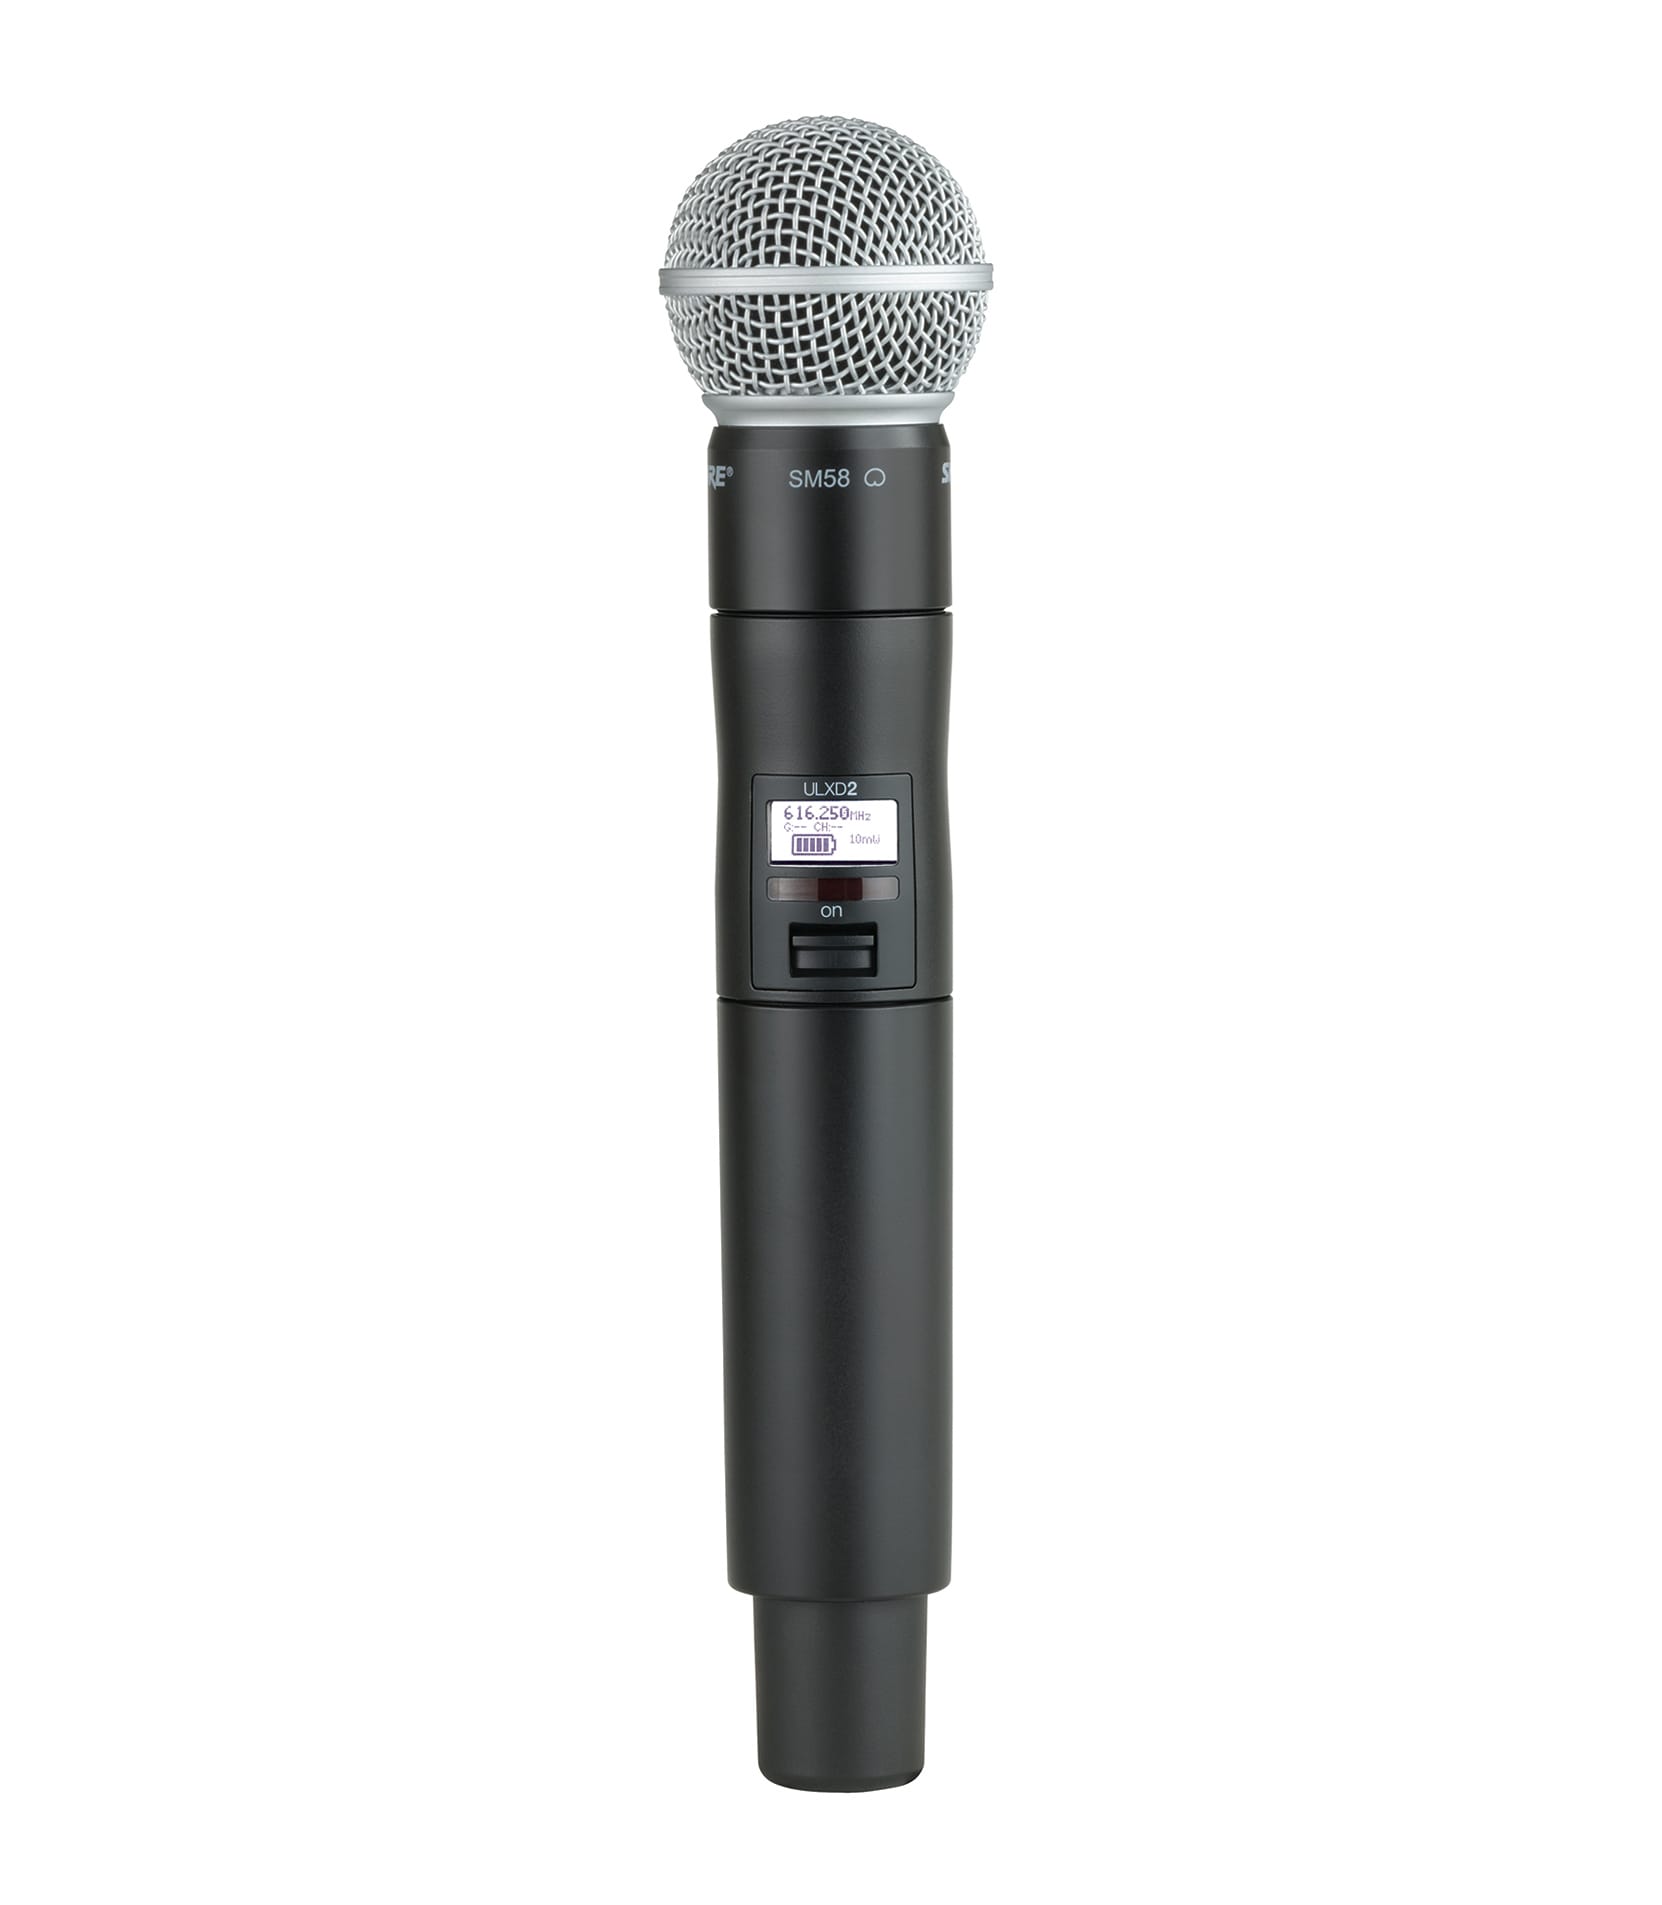 NMK Dubai - Shure - Digital Handheld Wireless Microphone Transmitter w SM58